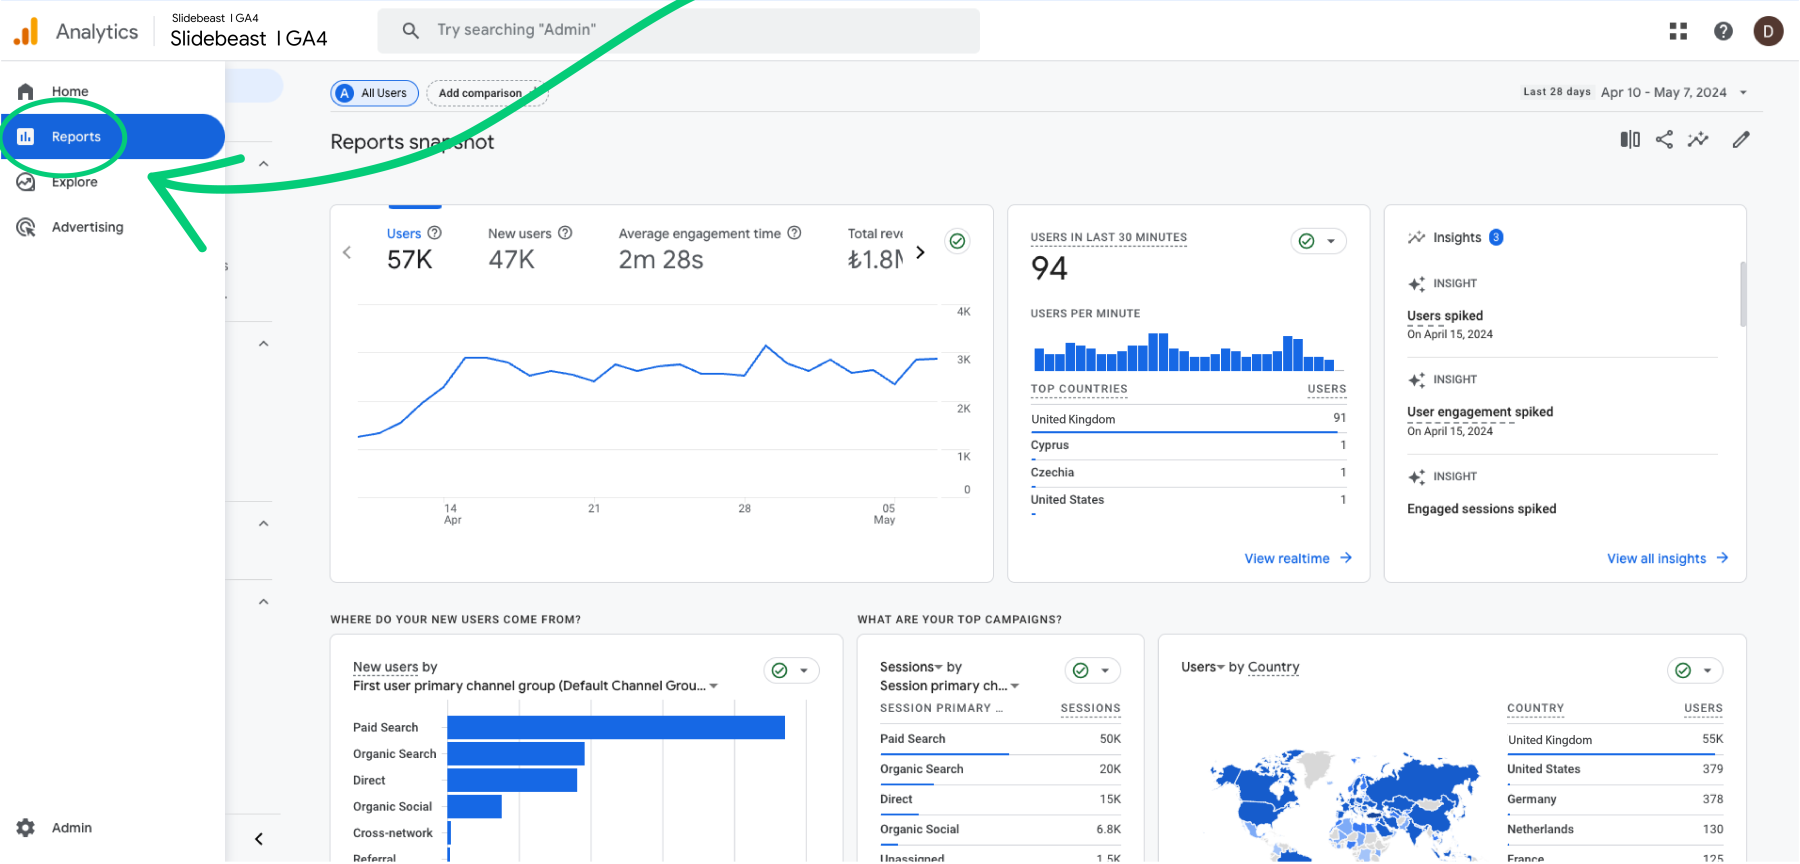 Google Analytics Overview - Reports